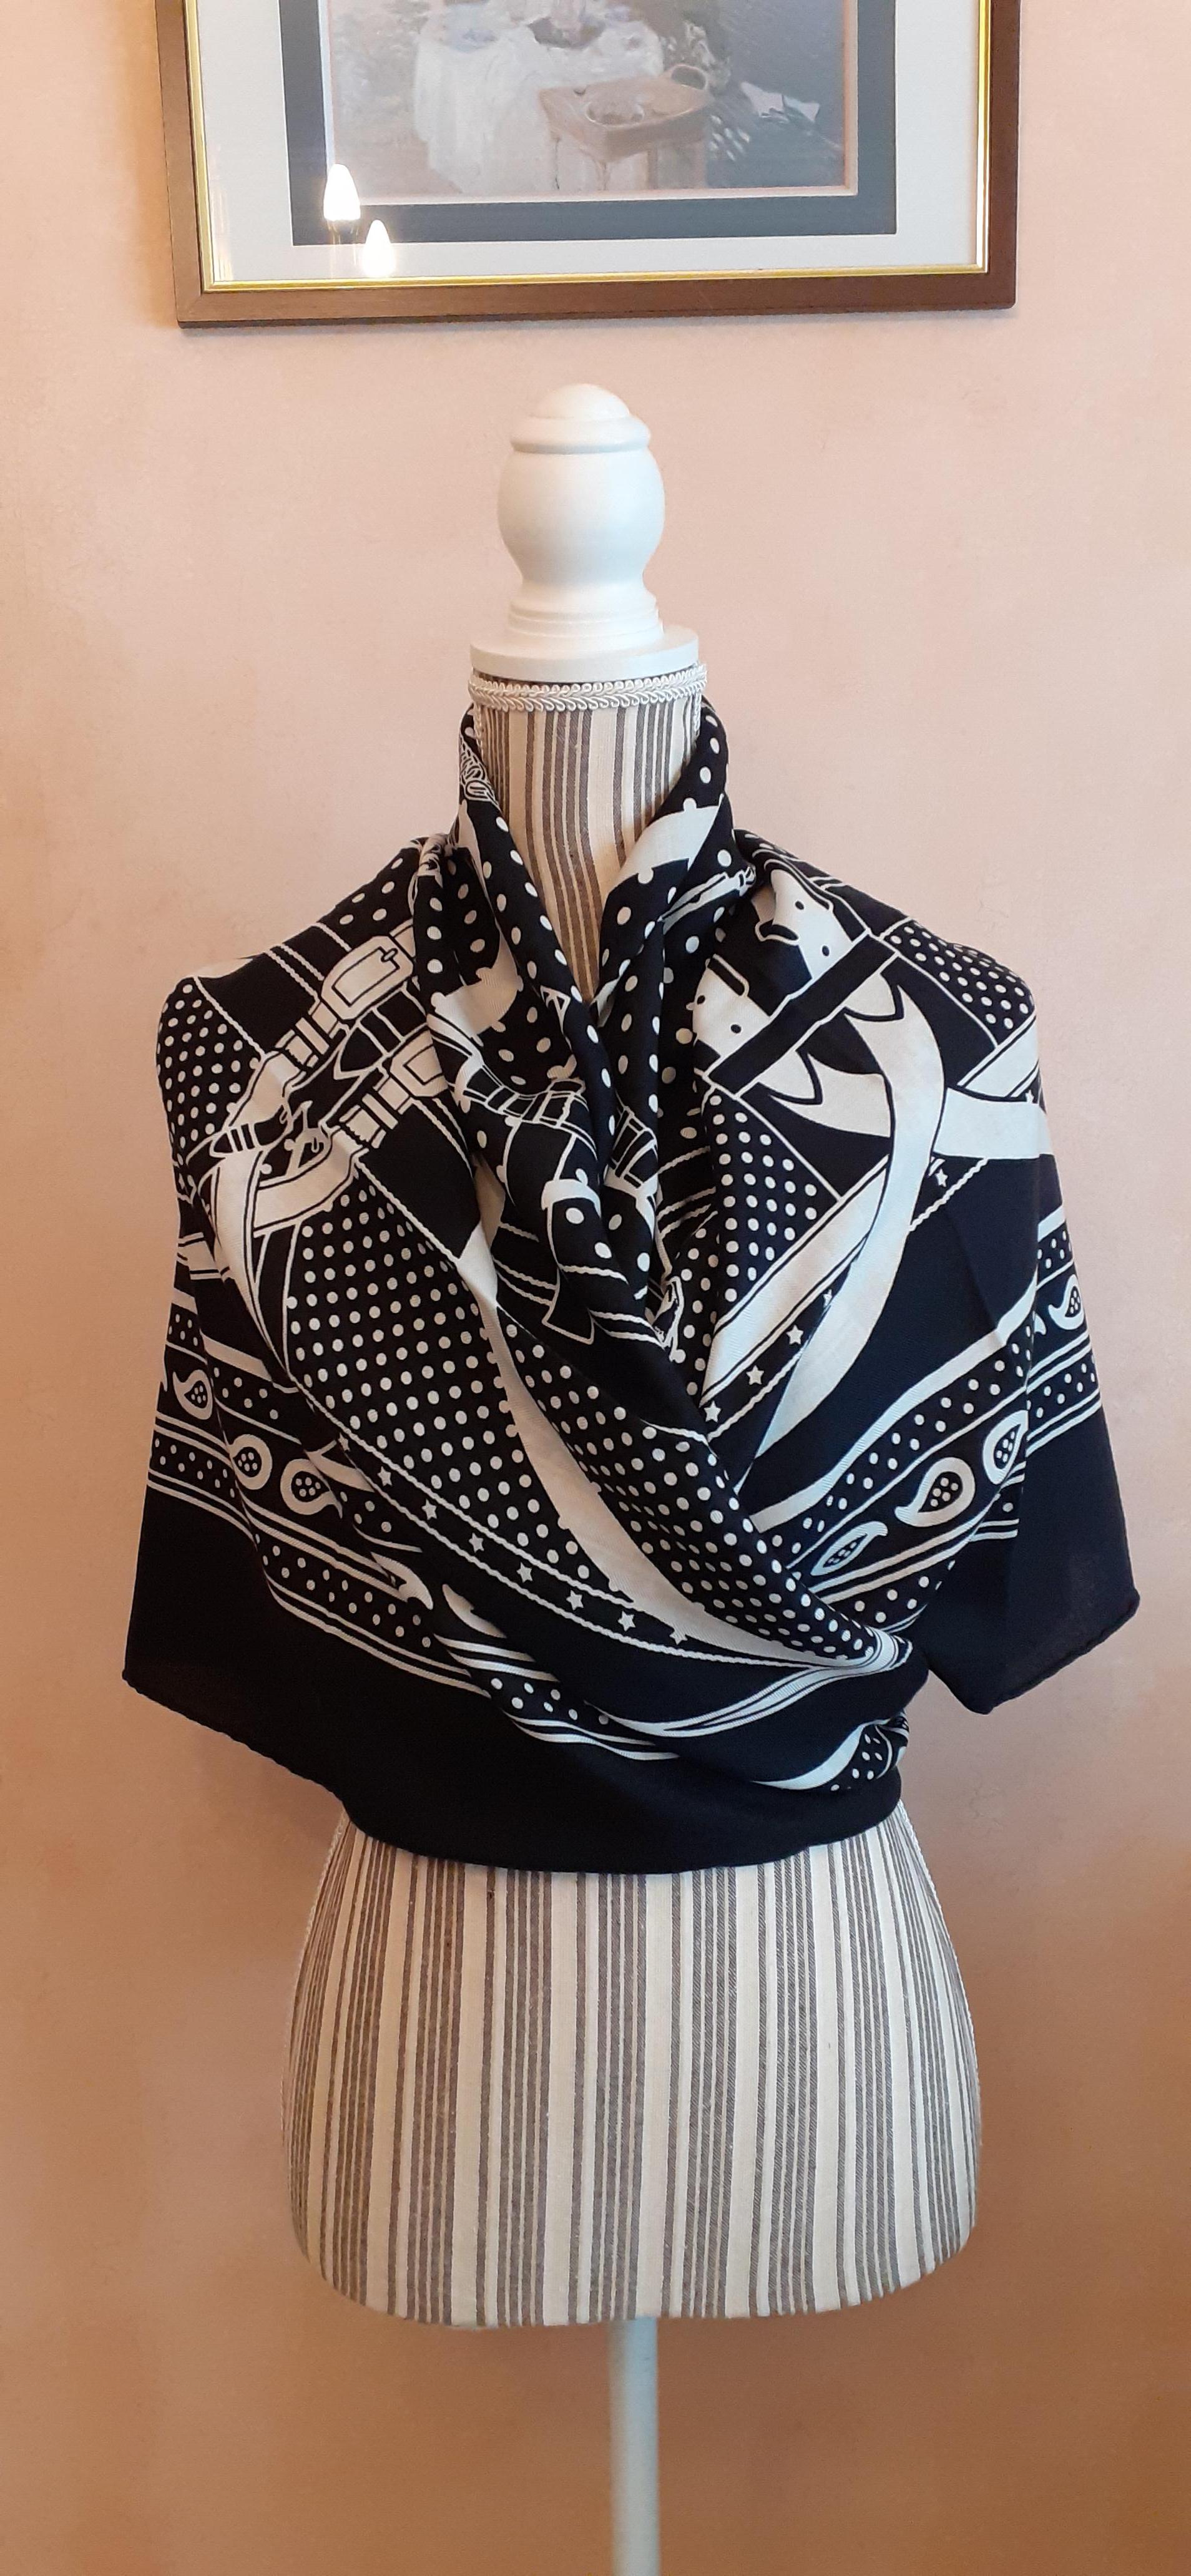 Hermès Shawl Scarf Grand Manege Bandana Cashmere and Silk White Black 140 cm 6